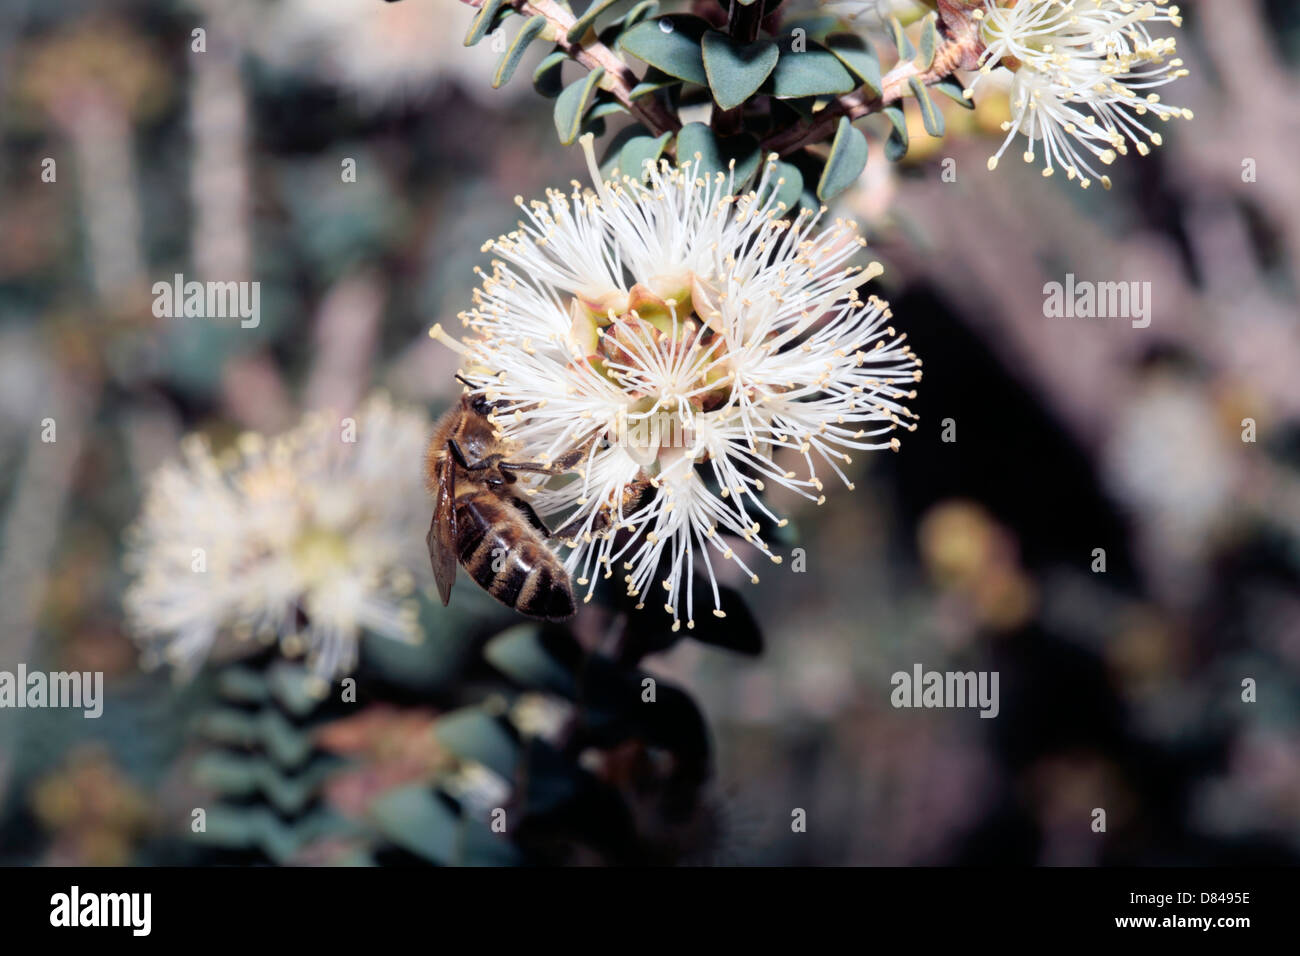 Melaleuca deepressa with Honeybee {Apis mellifera] collecting pollen - No common name- Family Myrtaceae Stock Photo